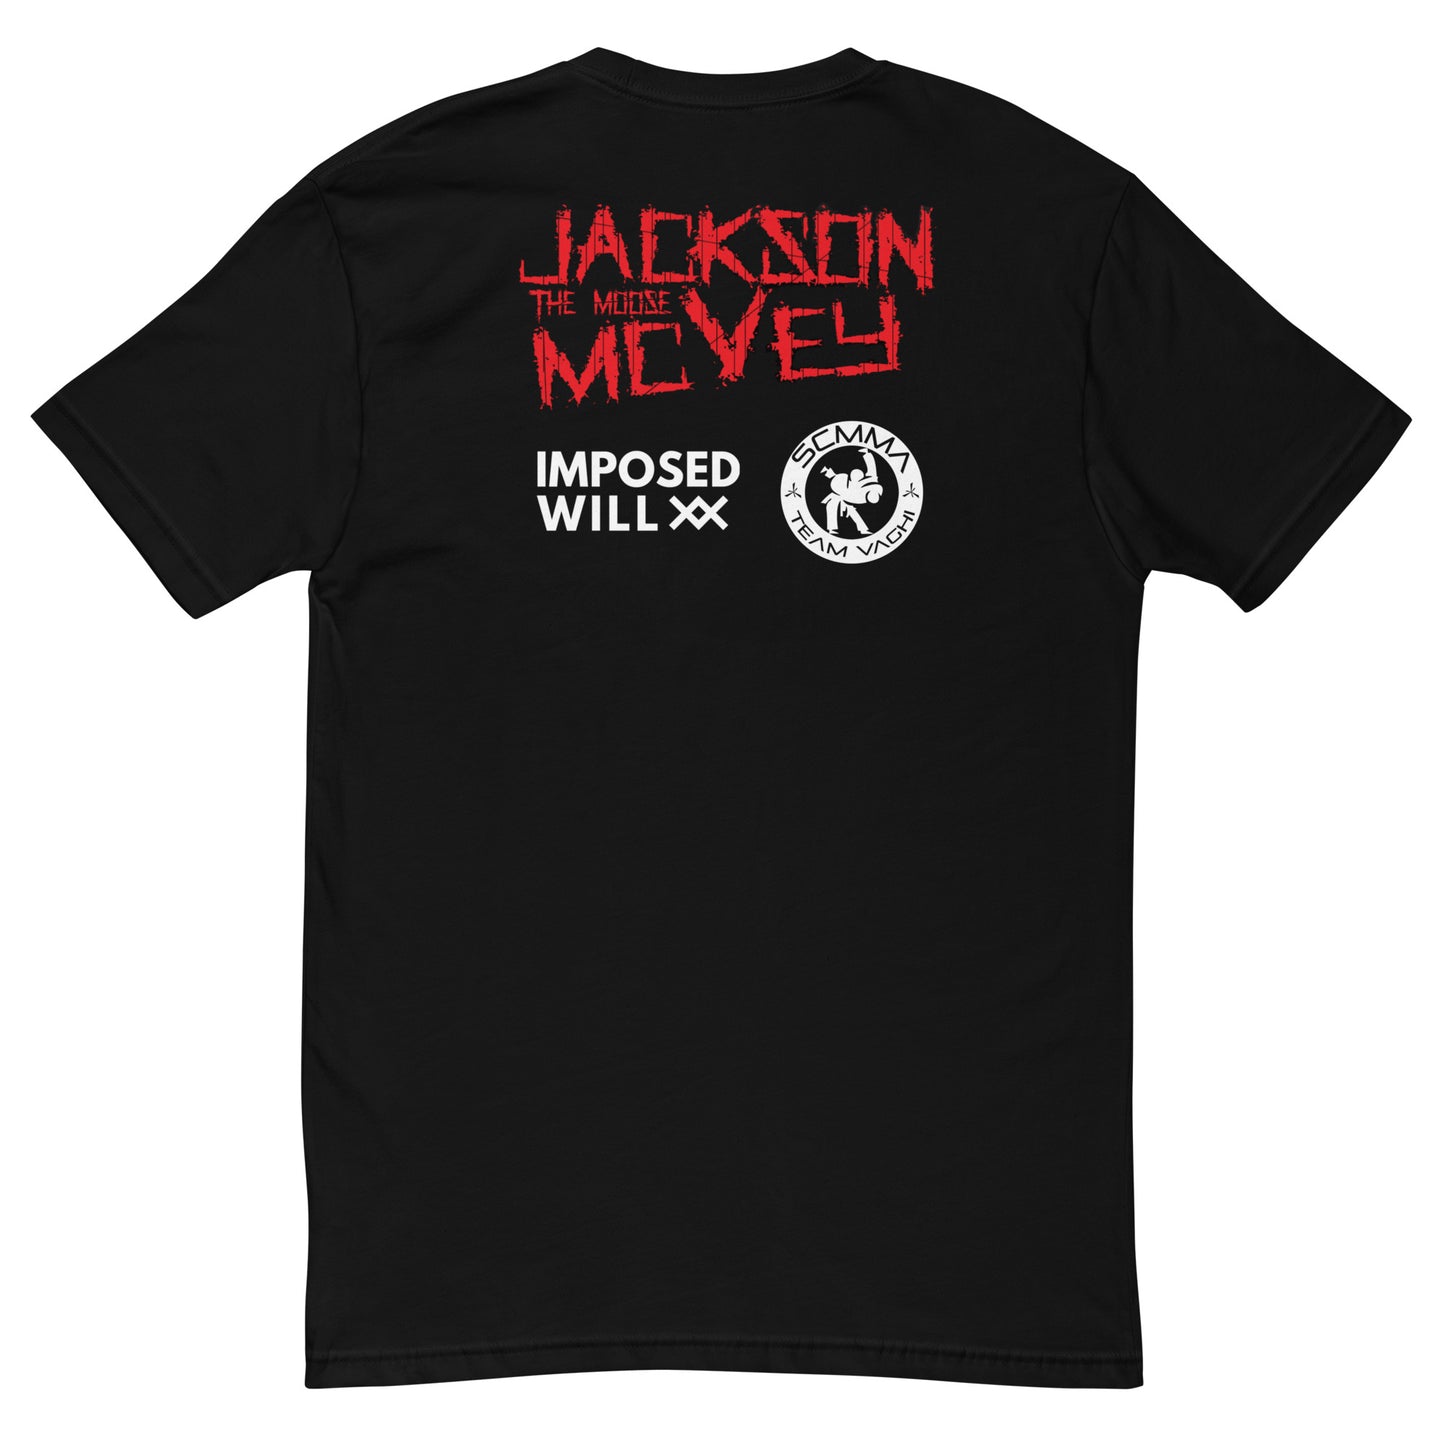 Metal Moose T-shirt - ADULT UNISEX